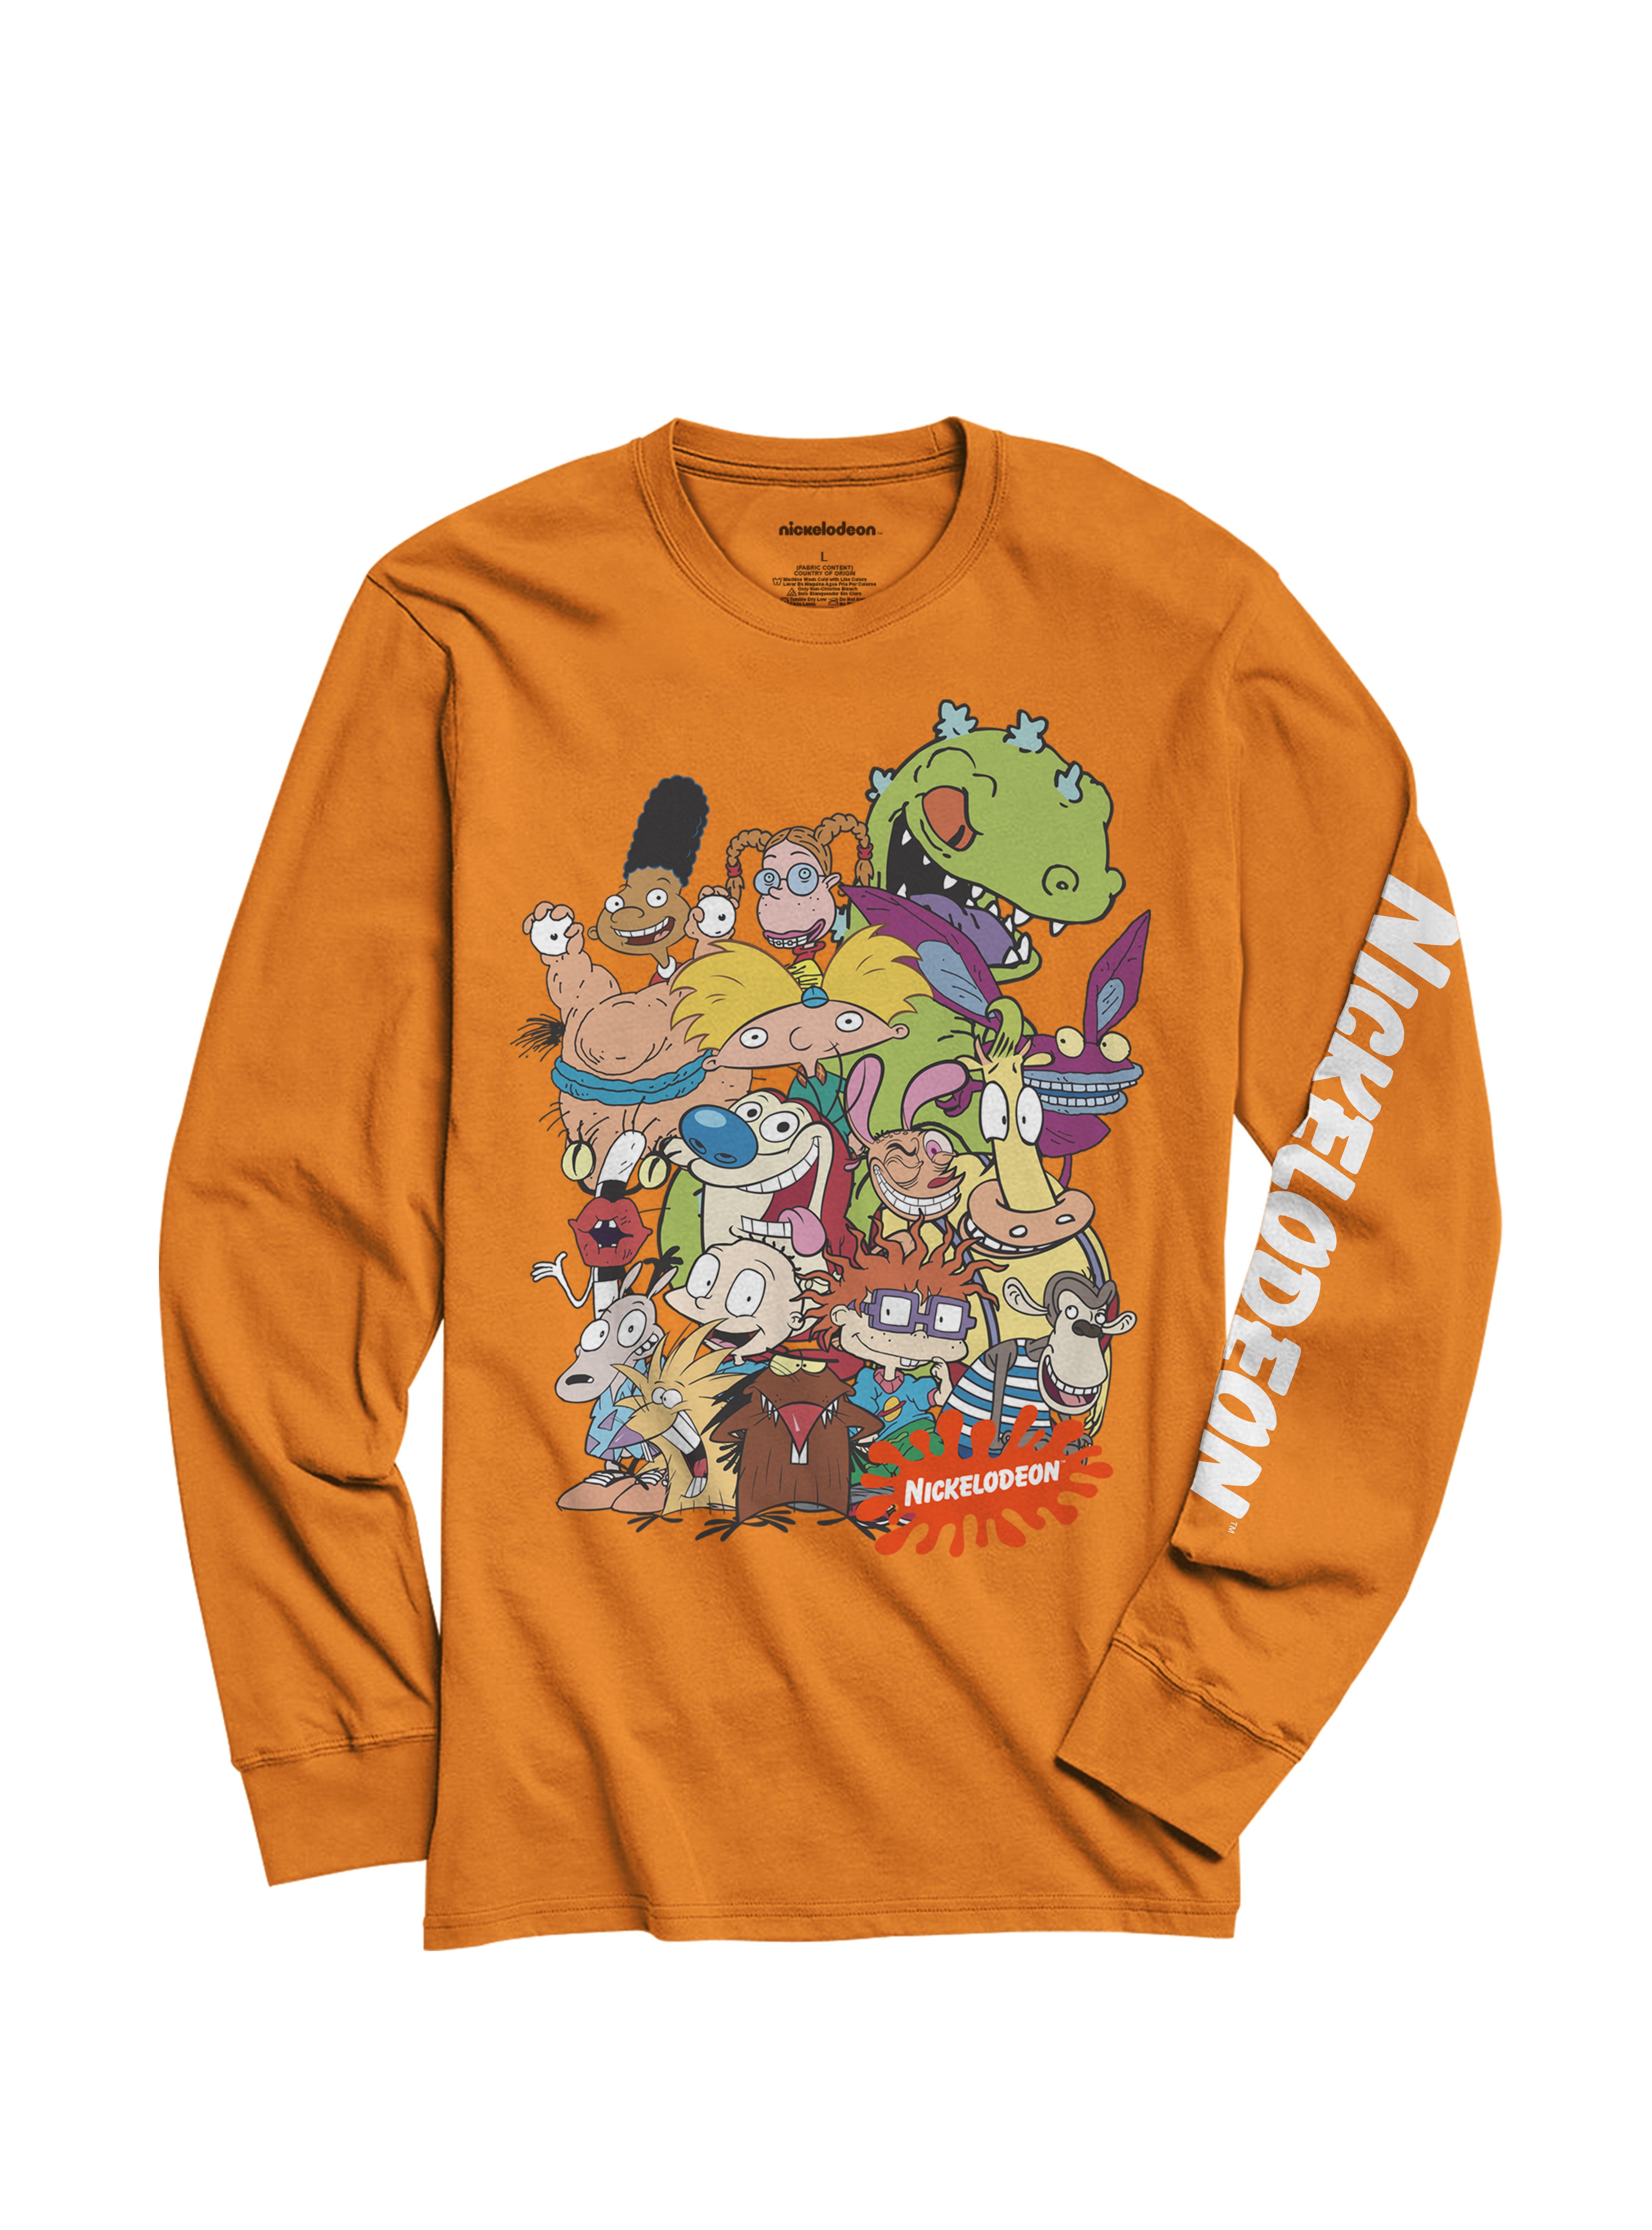 Nickelodeon Classic Characters Long-Sleeve T-Shirt | Hot Topic